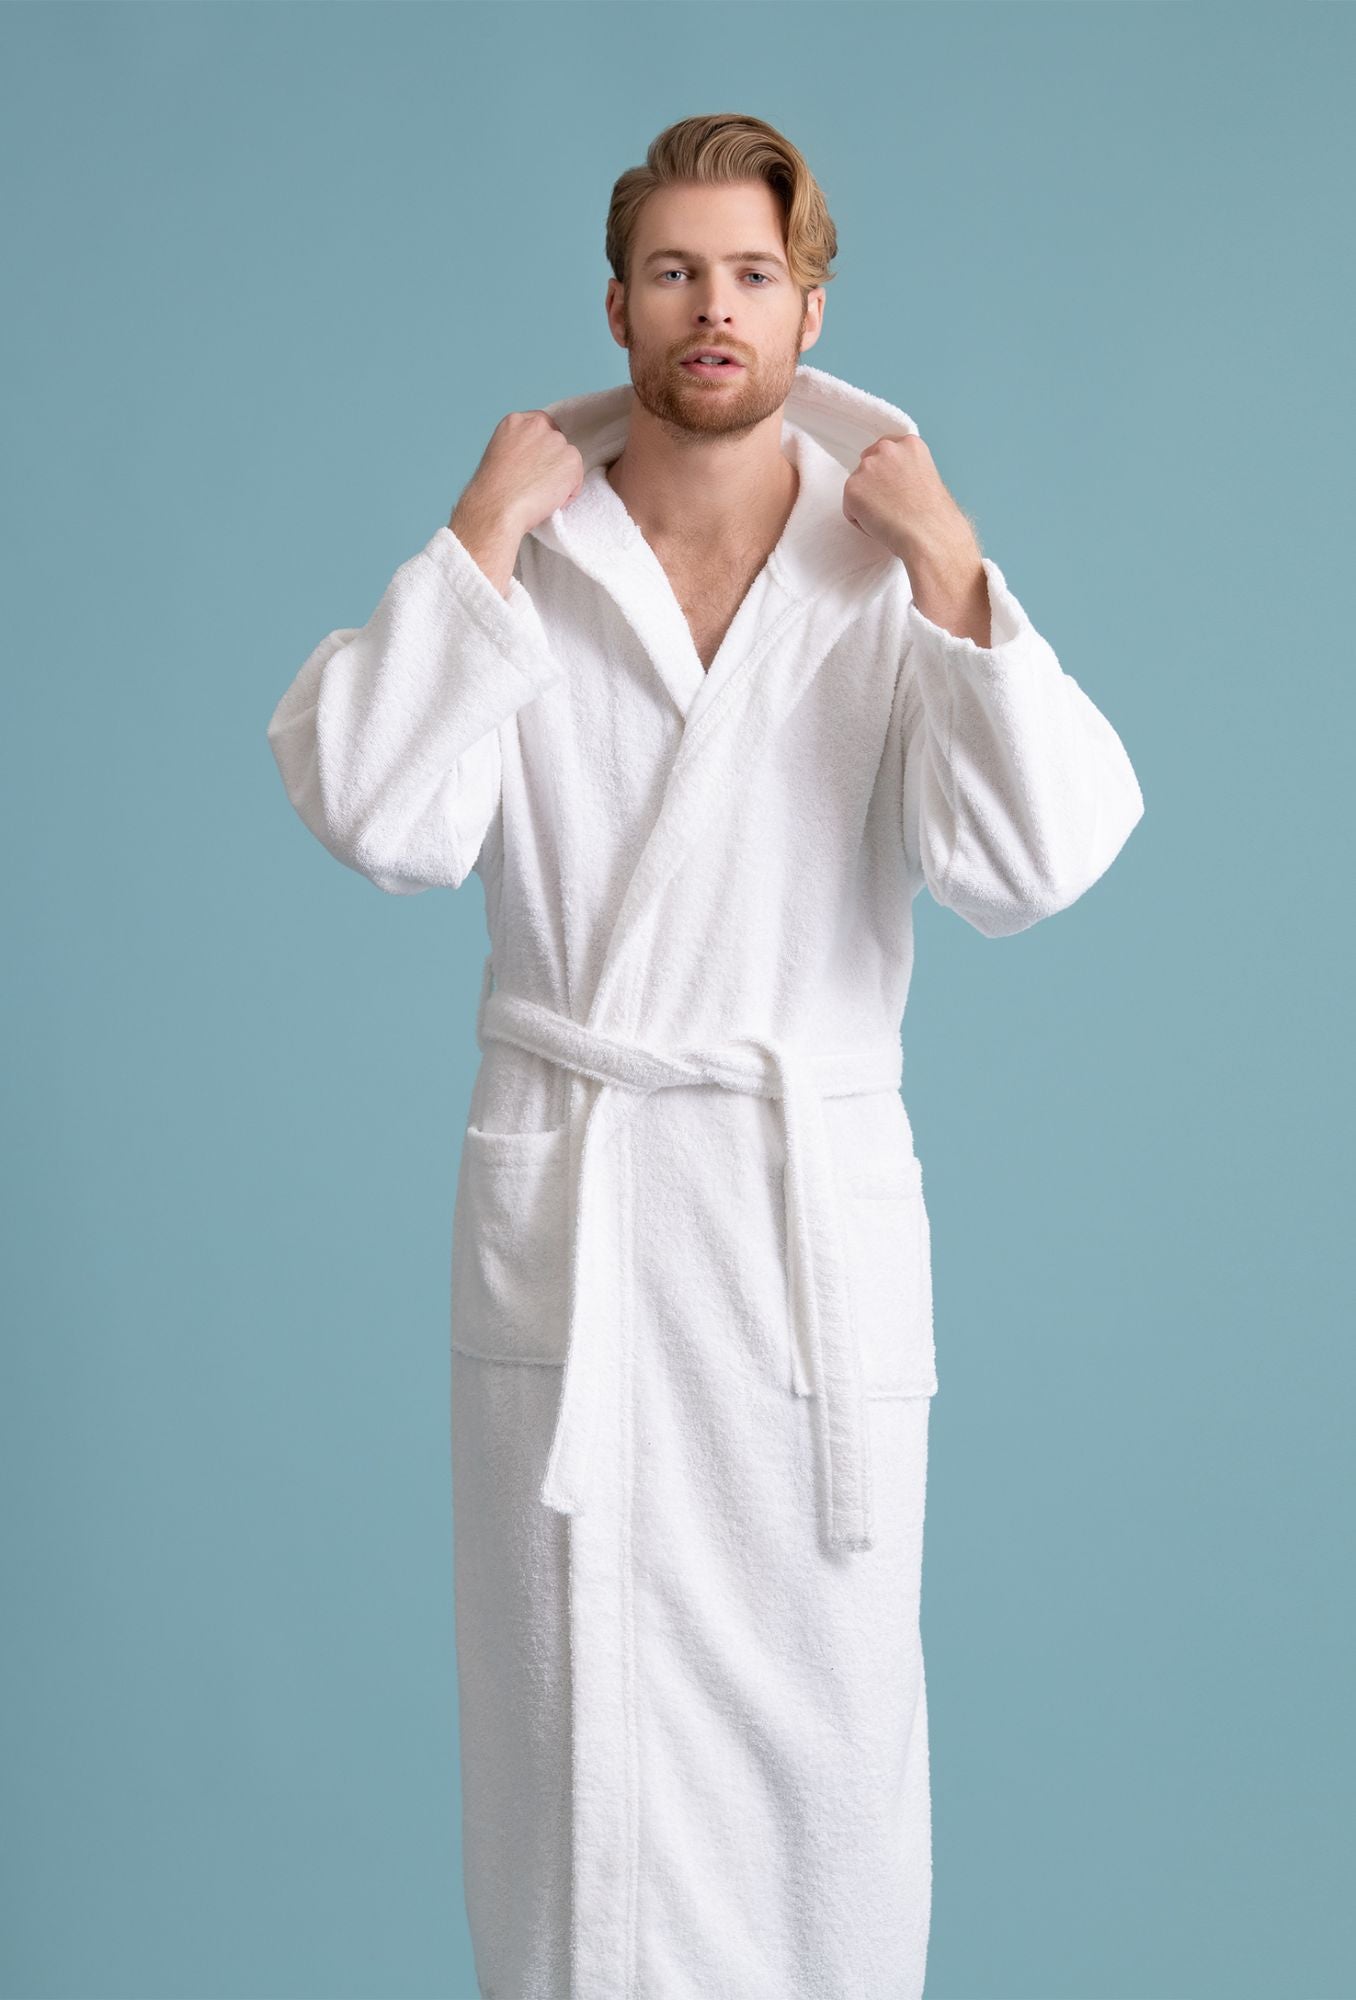 Men's Hooded Robe, Turkish Cotton Terry Hooded Spa Gray Bathrobe